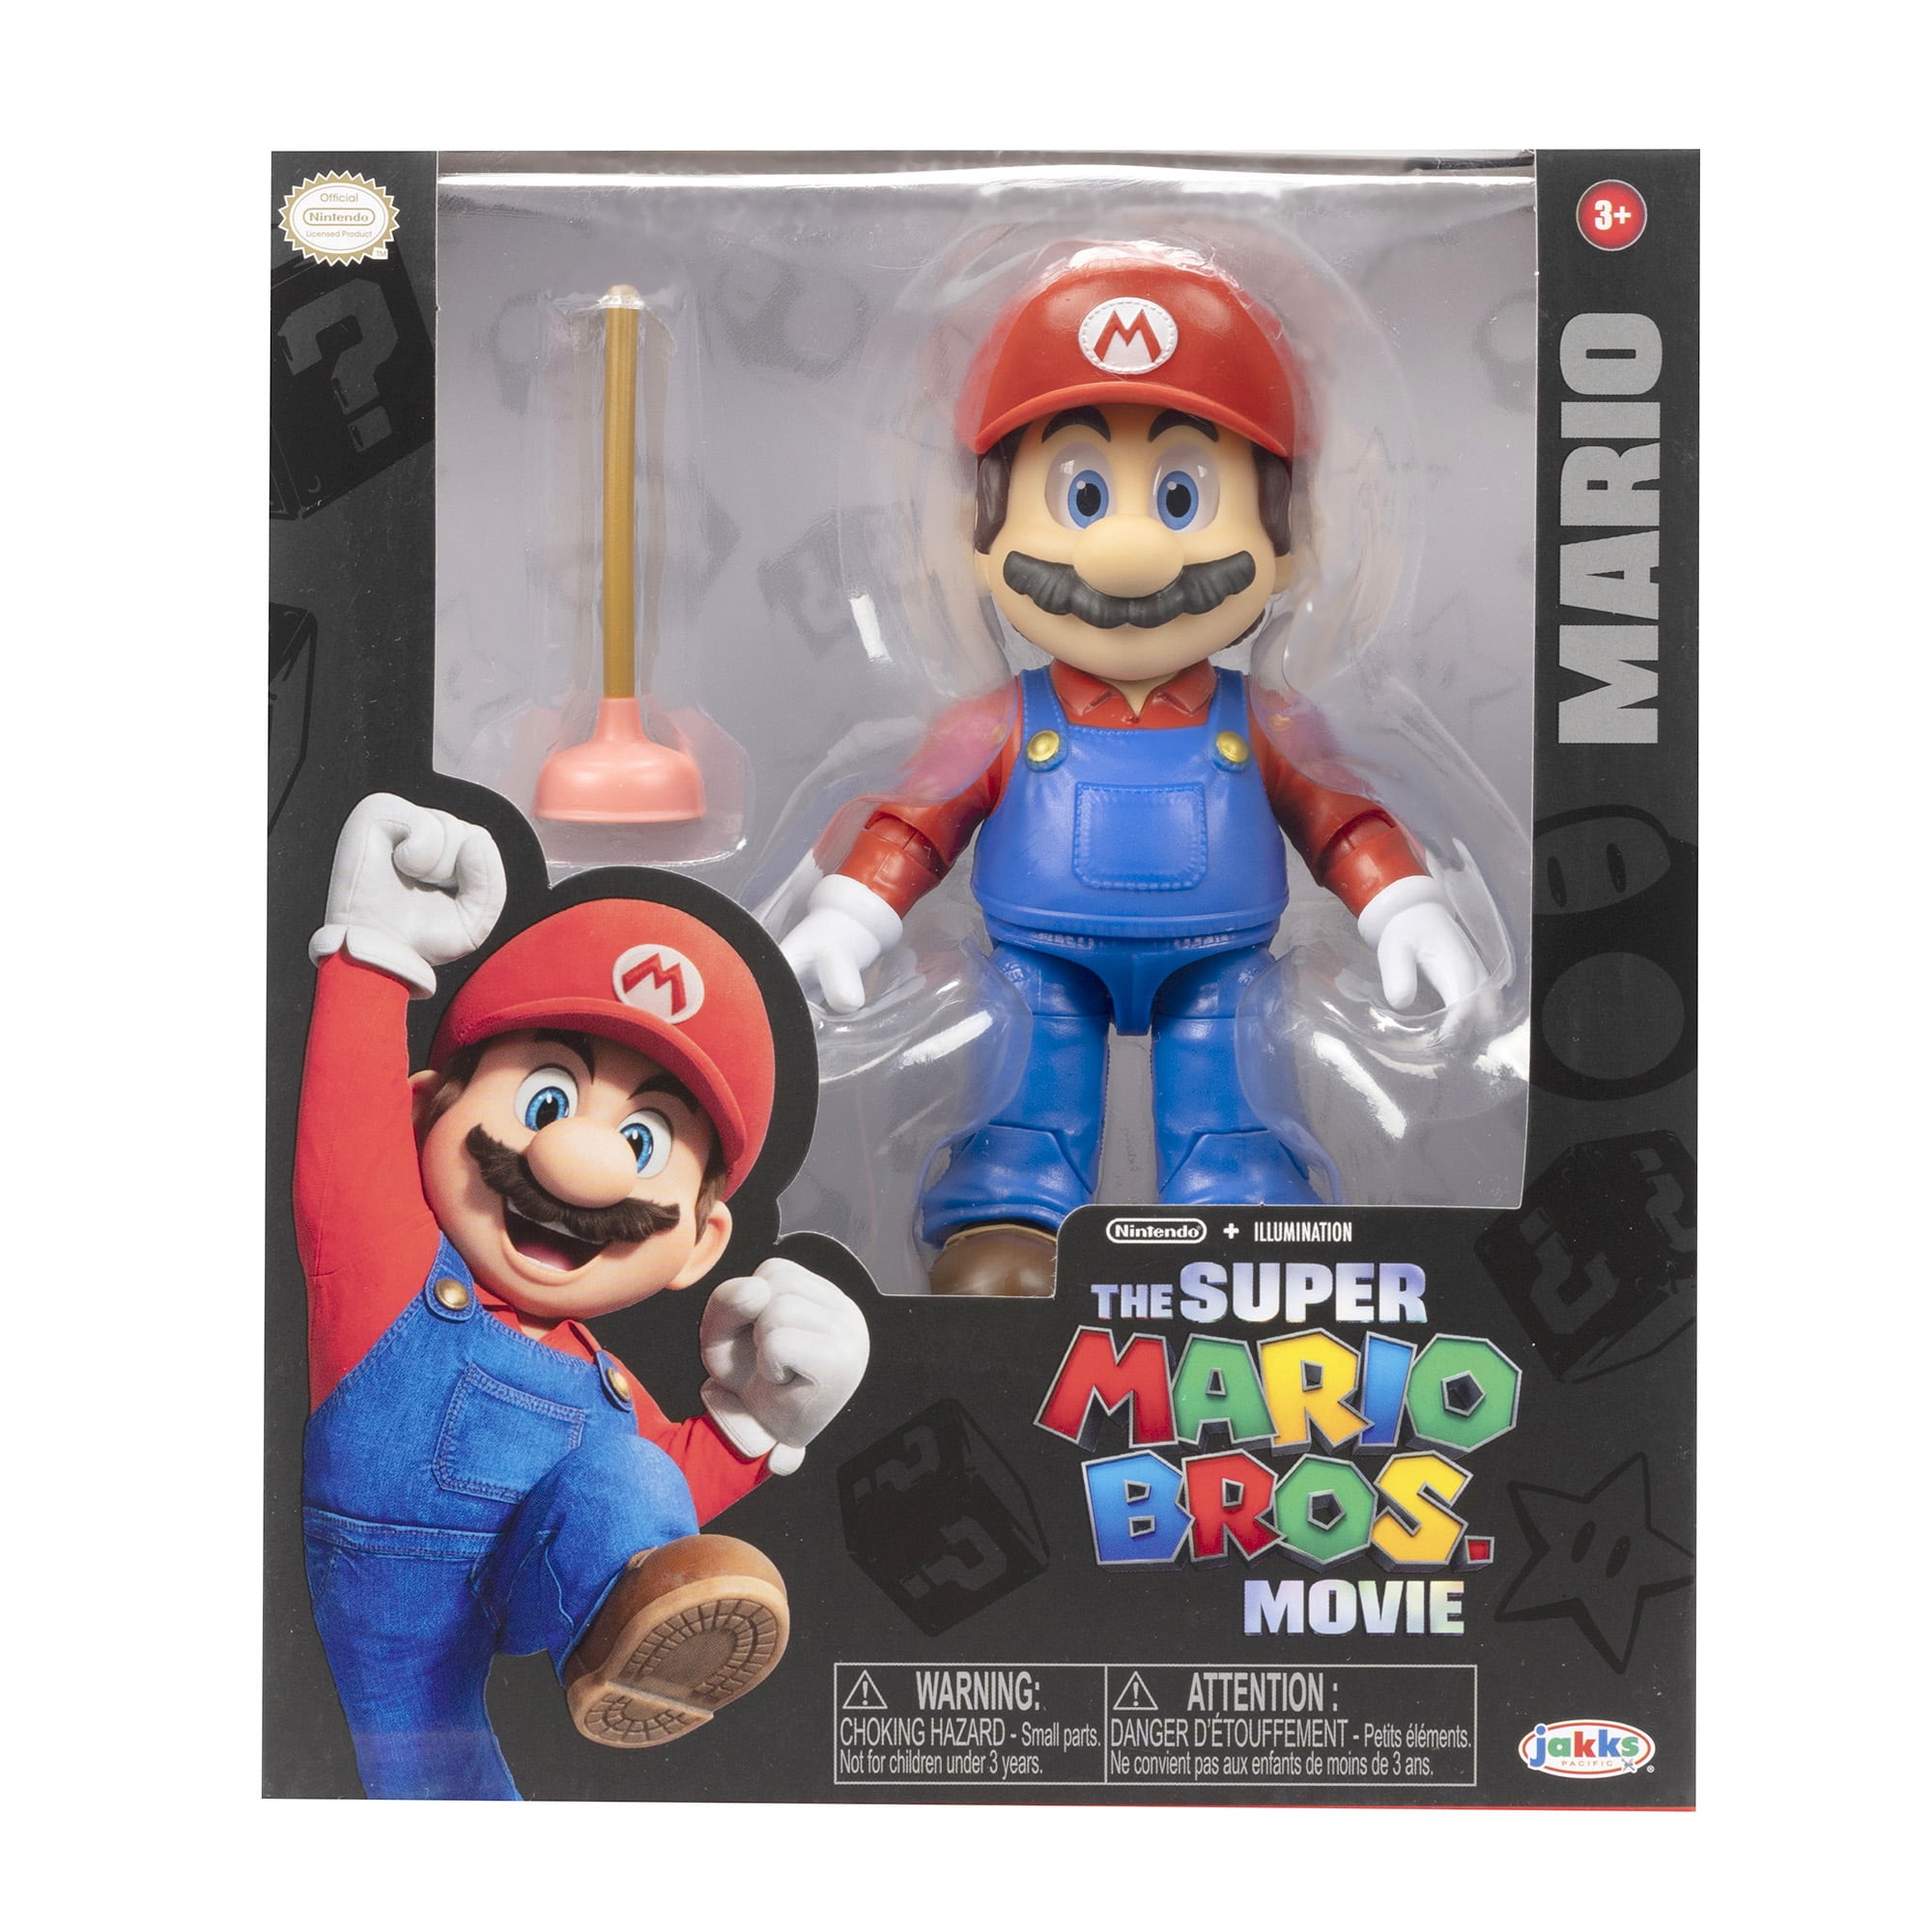 The Super Mario Bros. Movie 5 inch Mario Figure with Plunger Accessory